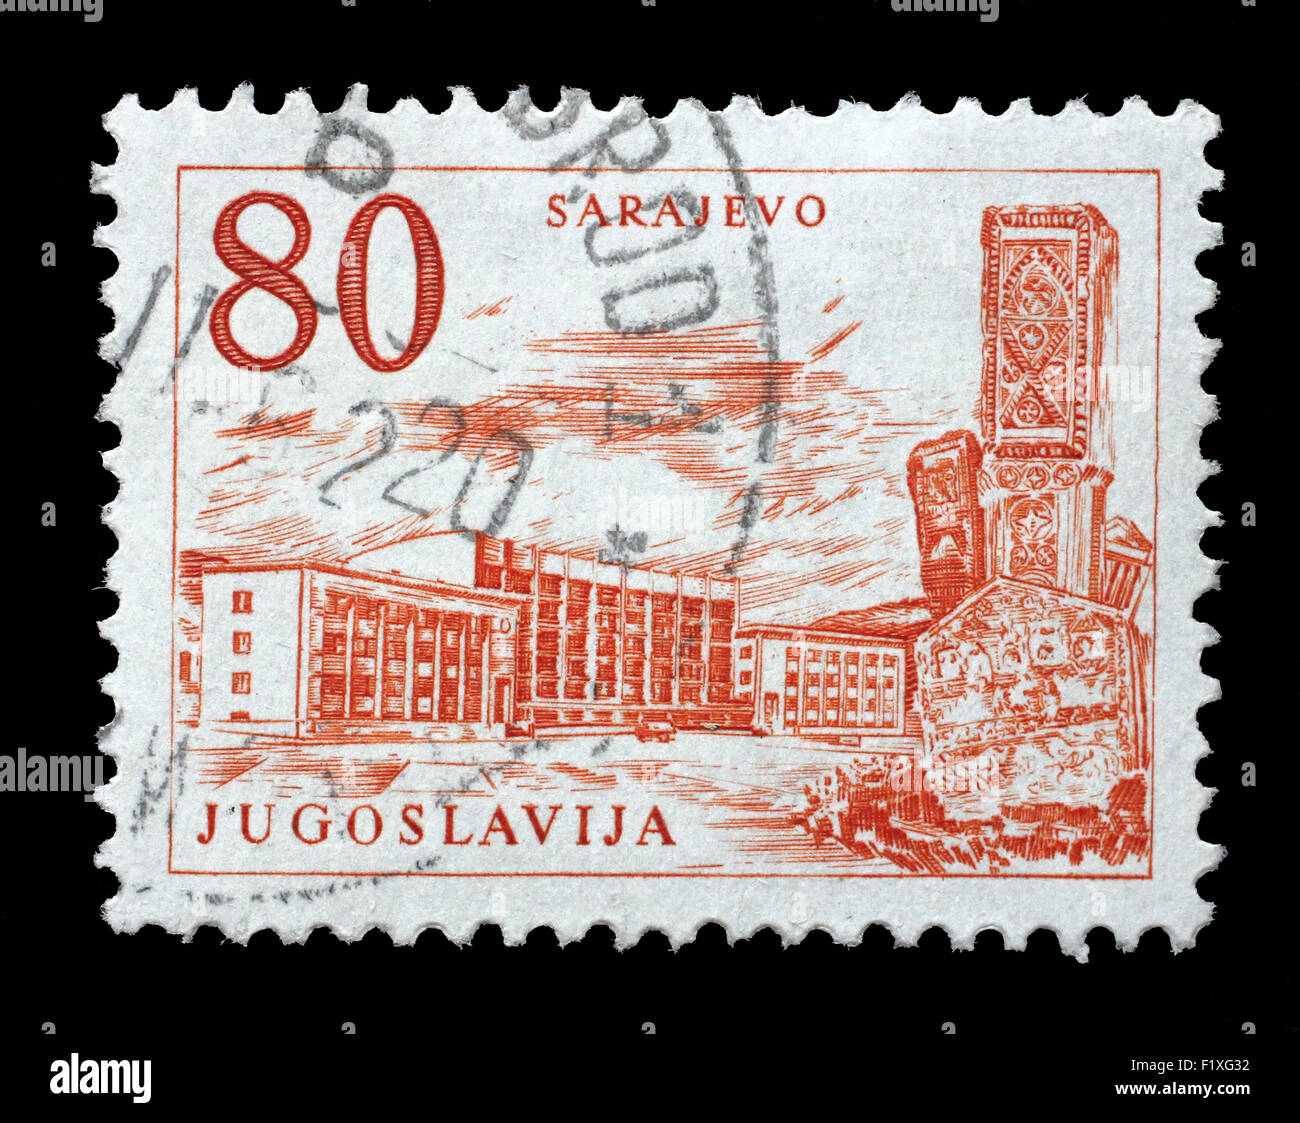 Stamp printed in Yugoslavia shows Sarajevo railway station and obelisk, Bosnia and Herzegovina, circa 1958. Stock Photo